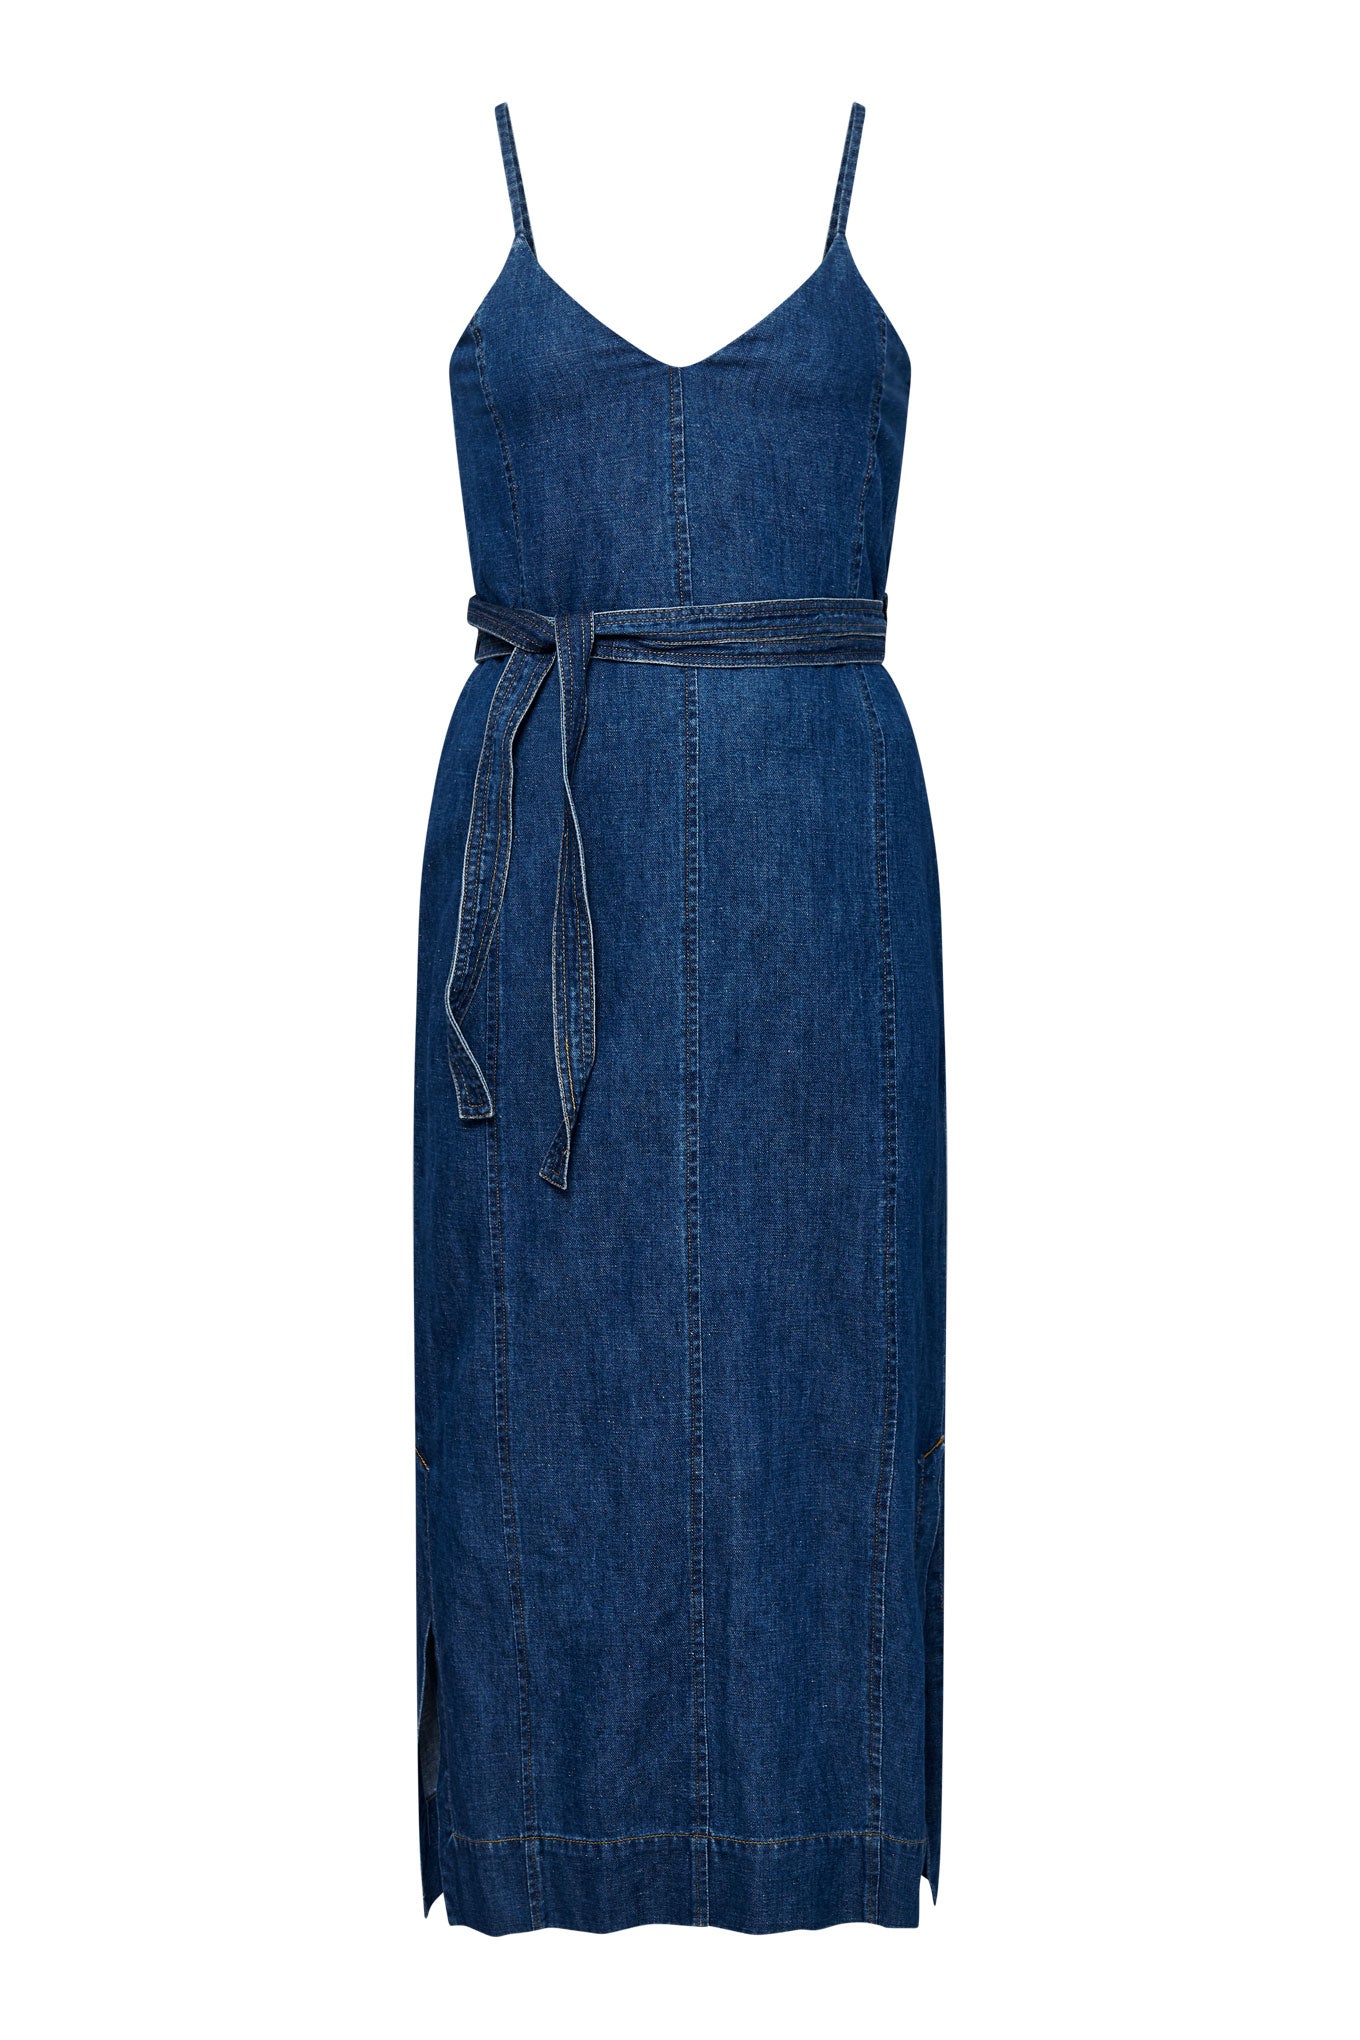 Komodo Women's Blue Iman - Organic Cotton Mid Wash Dress